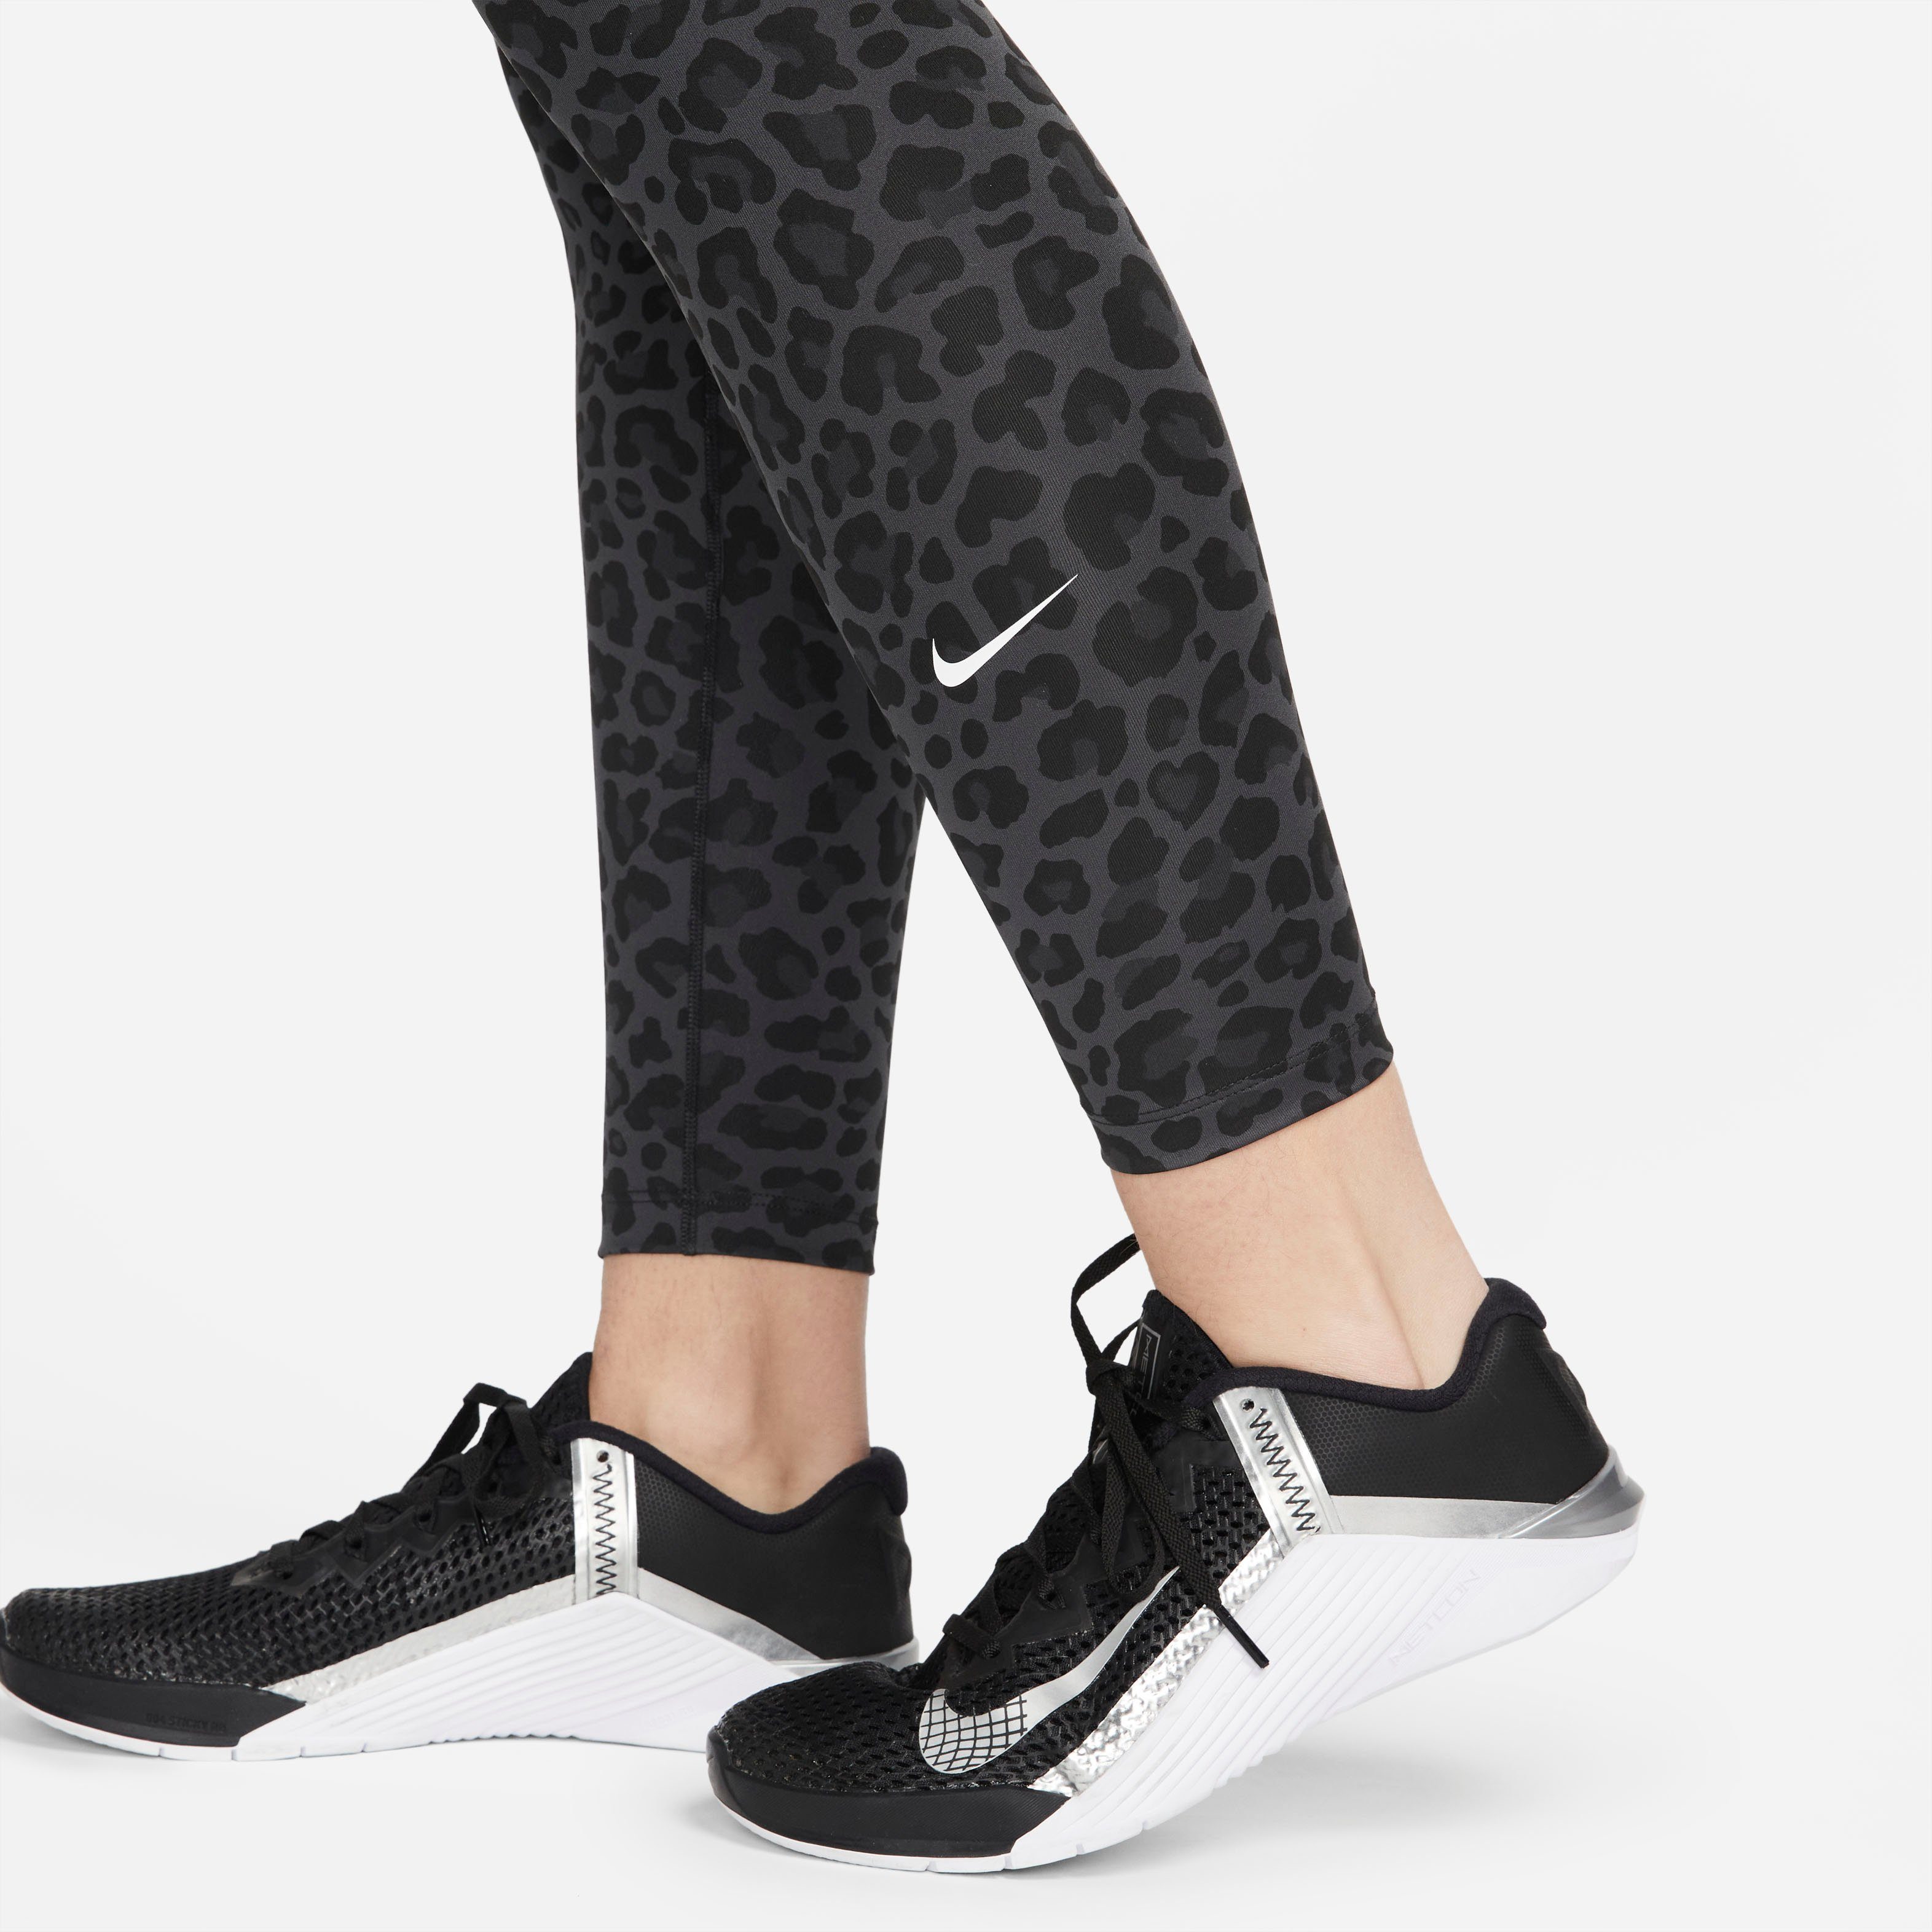 Nike Leggings SMOKE GREY/WHITE Women's High-Waisted One Trainingstights DK Printed Dri-FIT